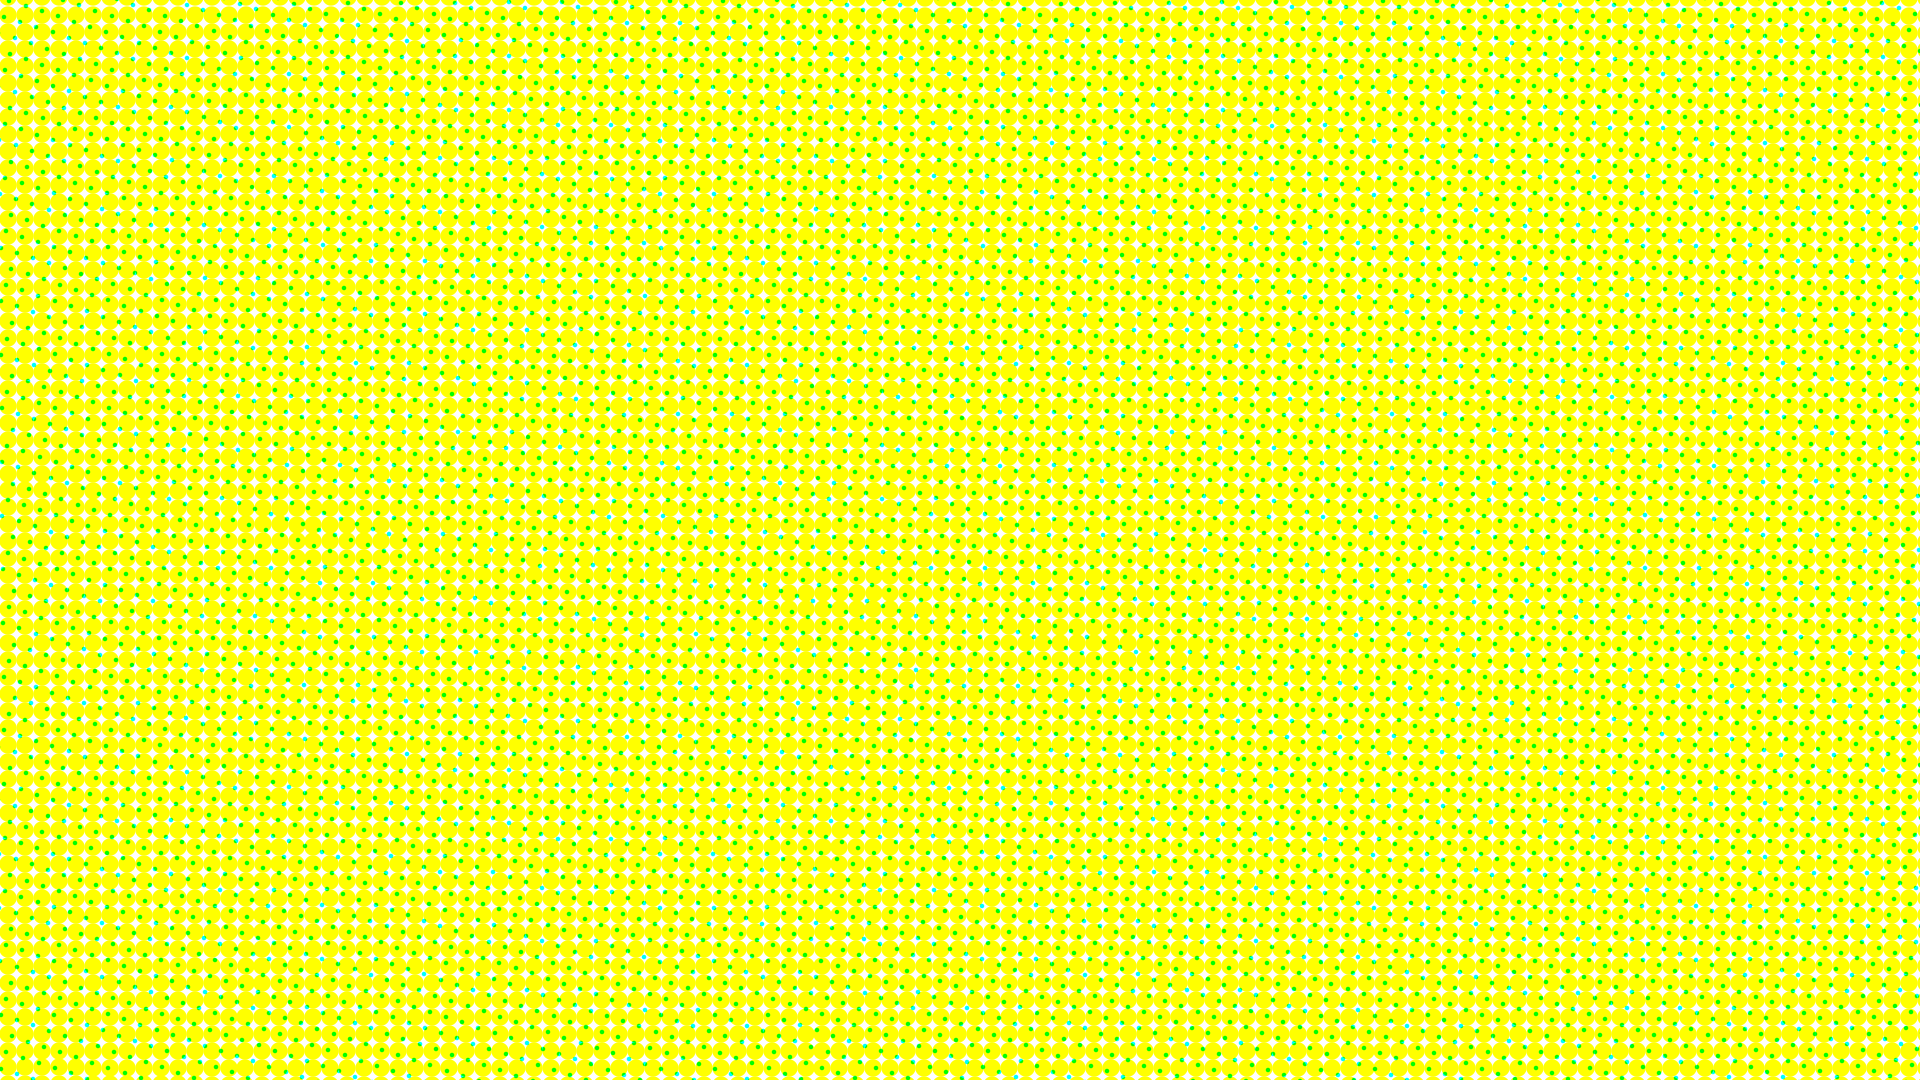 General 1920x1080 minimalism yellow texture dots yellow background